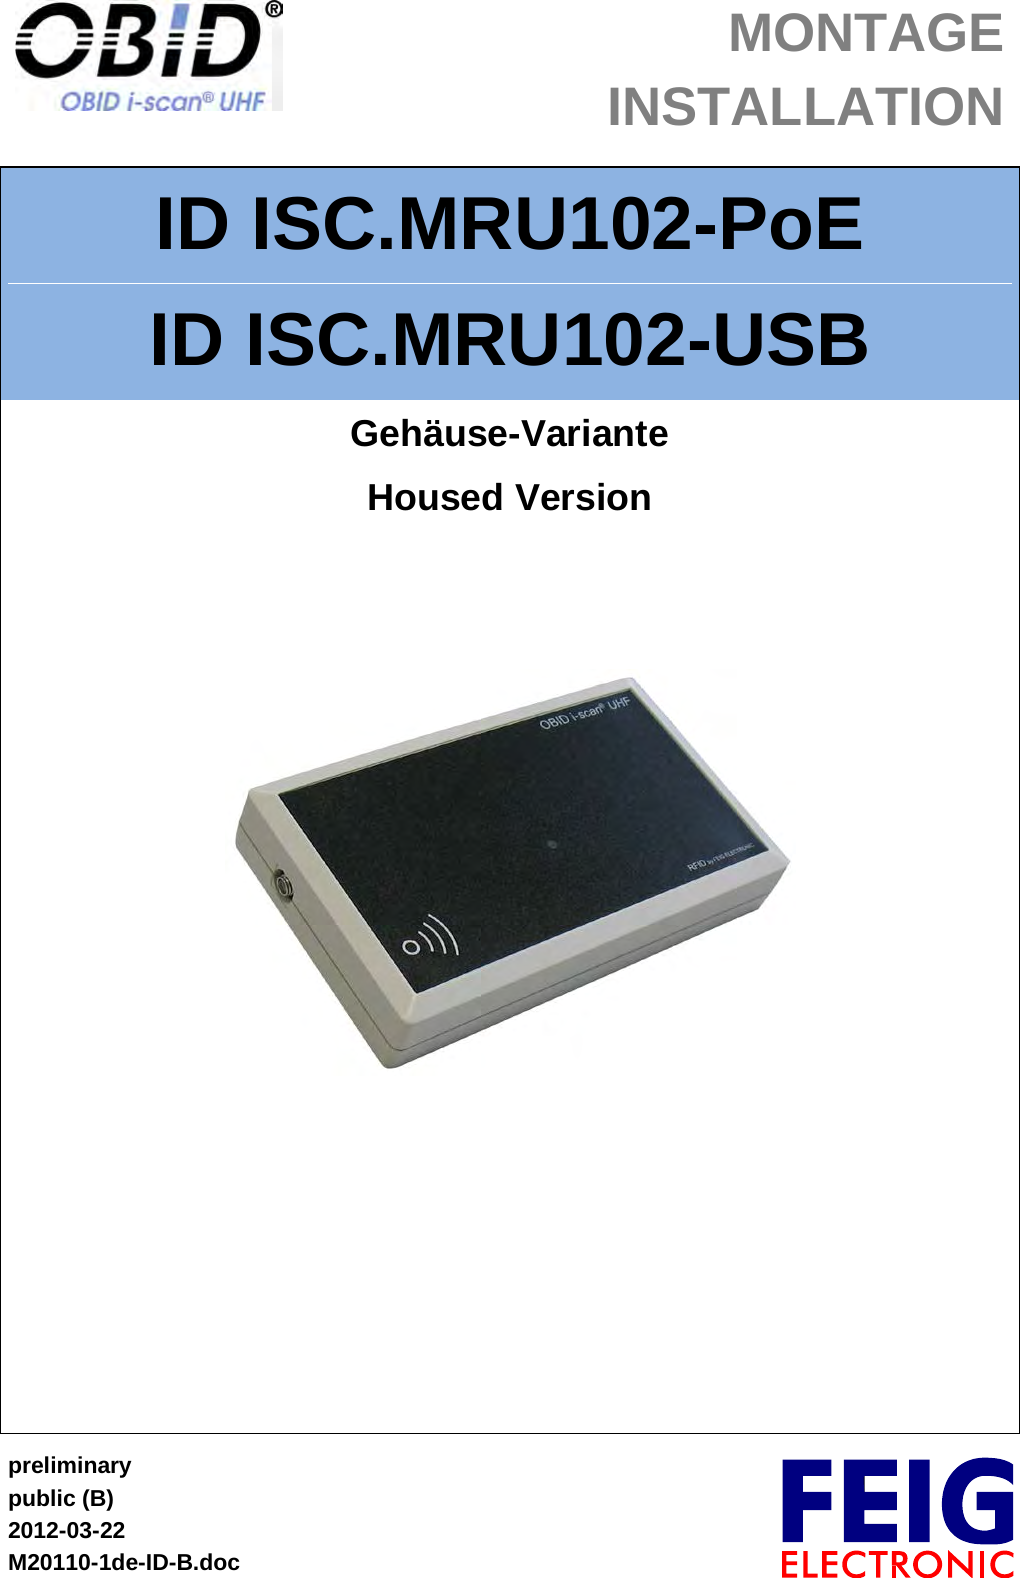  MONTAGE INSTALLATION   preliminary public (B) 2012-03-22 M20110-1de-ID-B.doc  ID ISC.MRU102-PoE ID ISC.MRU102-USB Gehäuse-Variante Housed Version        